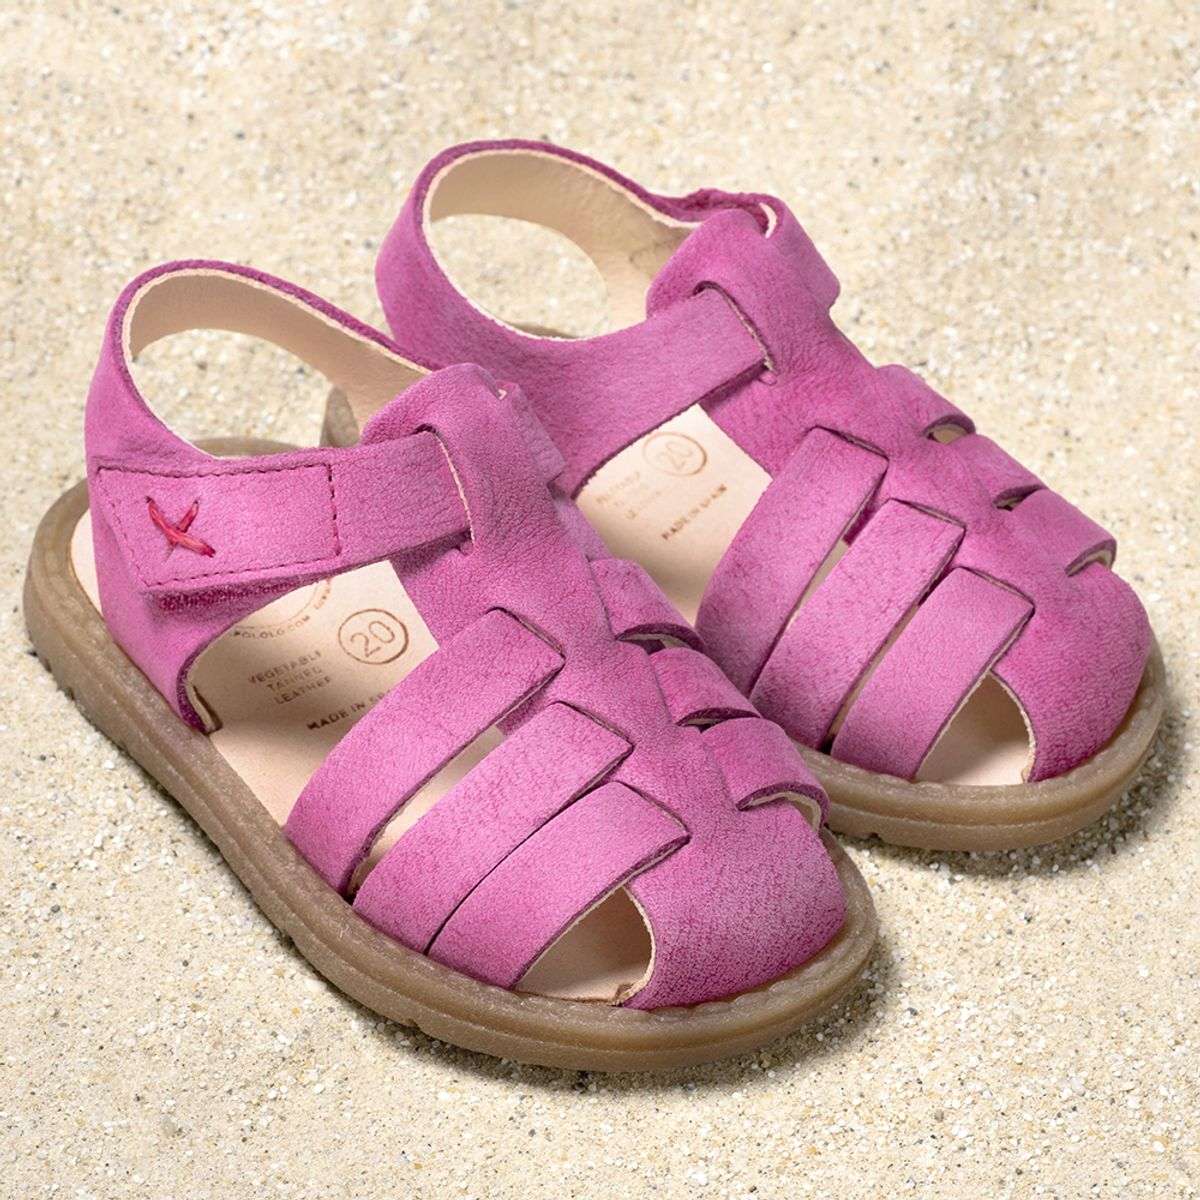 Pololo Unisex Kinder Fiesta Flat Sandal